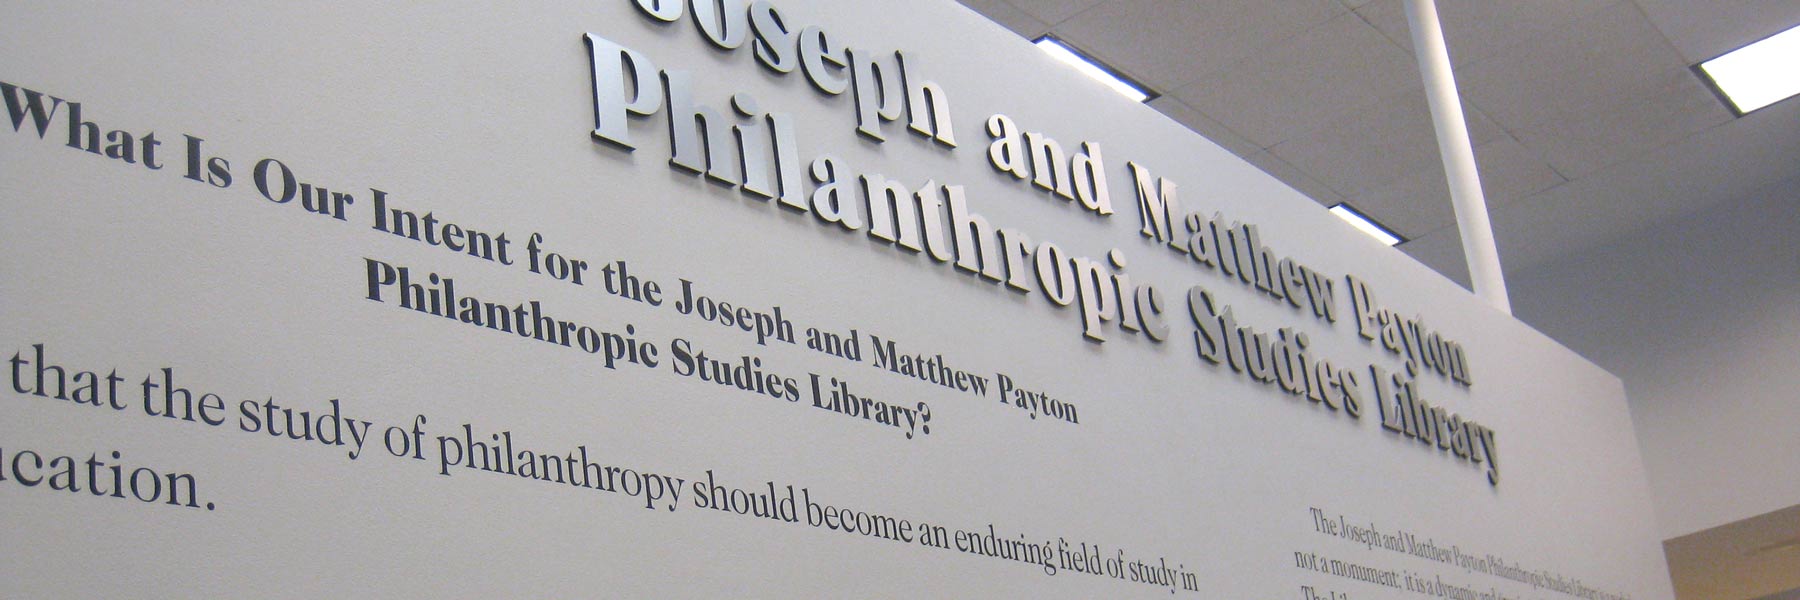 Philanthropic Studies Library